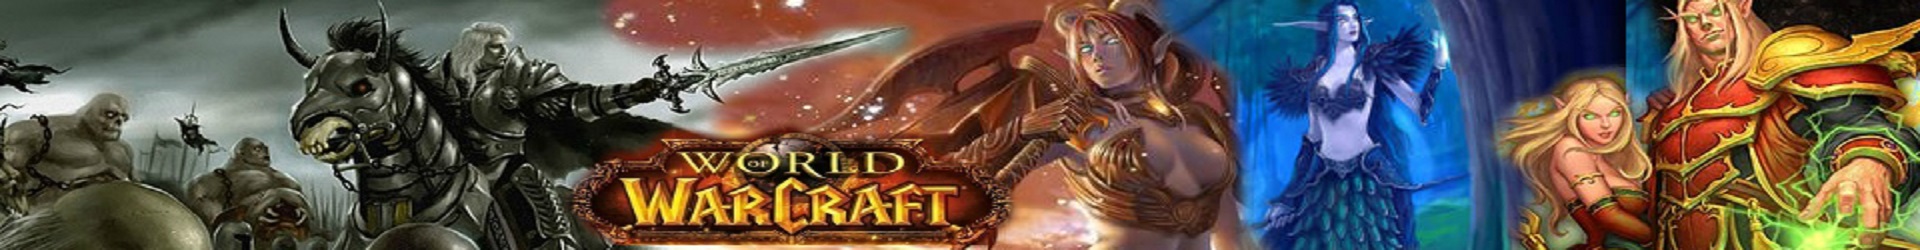 [SELLING] Professional services in World of Warcraft RU / EU / USA  |BOOSTING]-world_of_warcraft_raidline-com_boost_wow-jpg